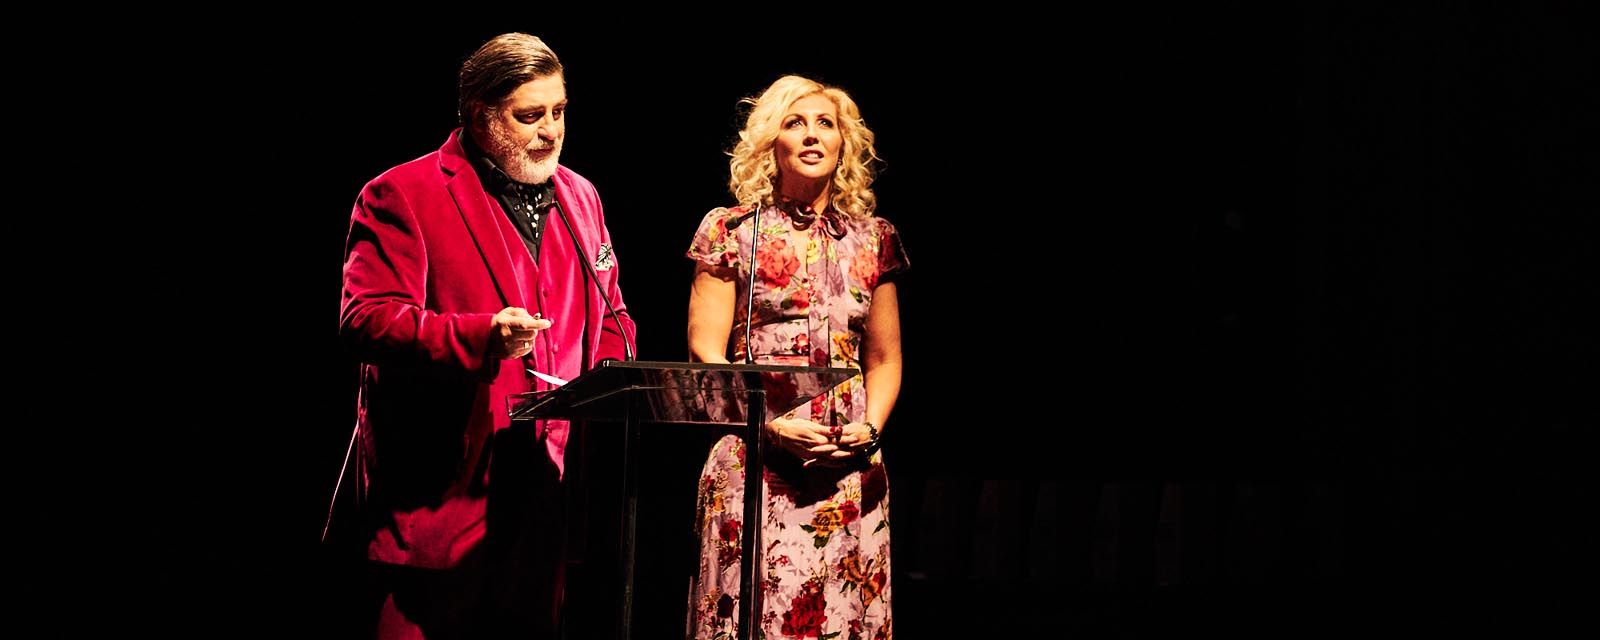 Matt Preston and Kerrie McCallum hosted this year's Produce Awards.